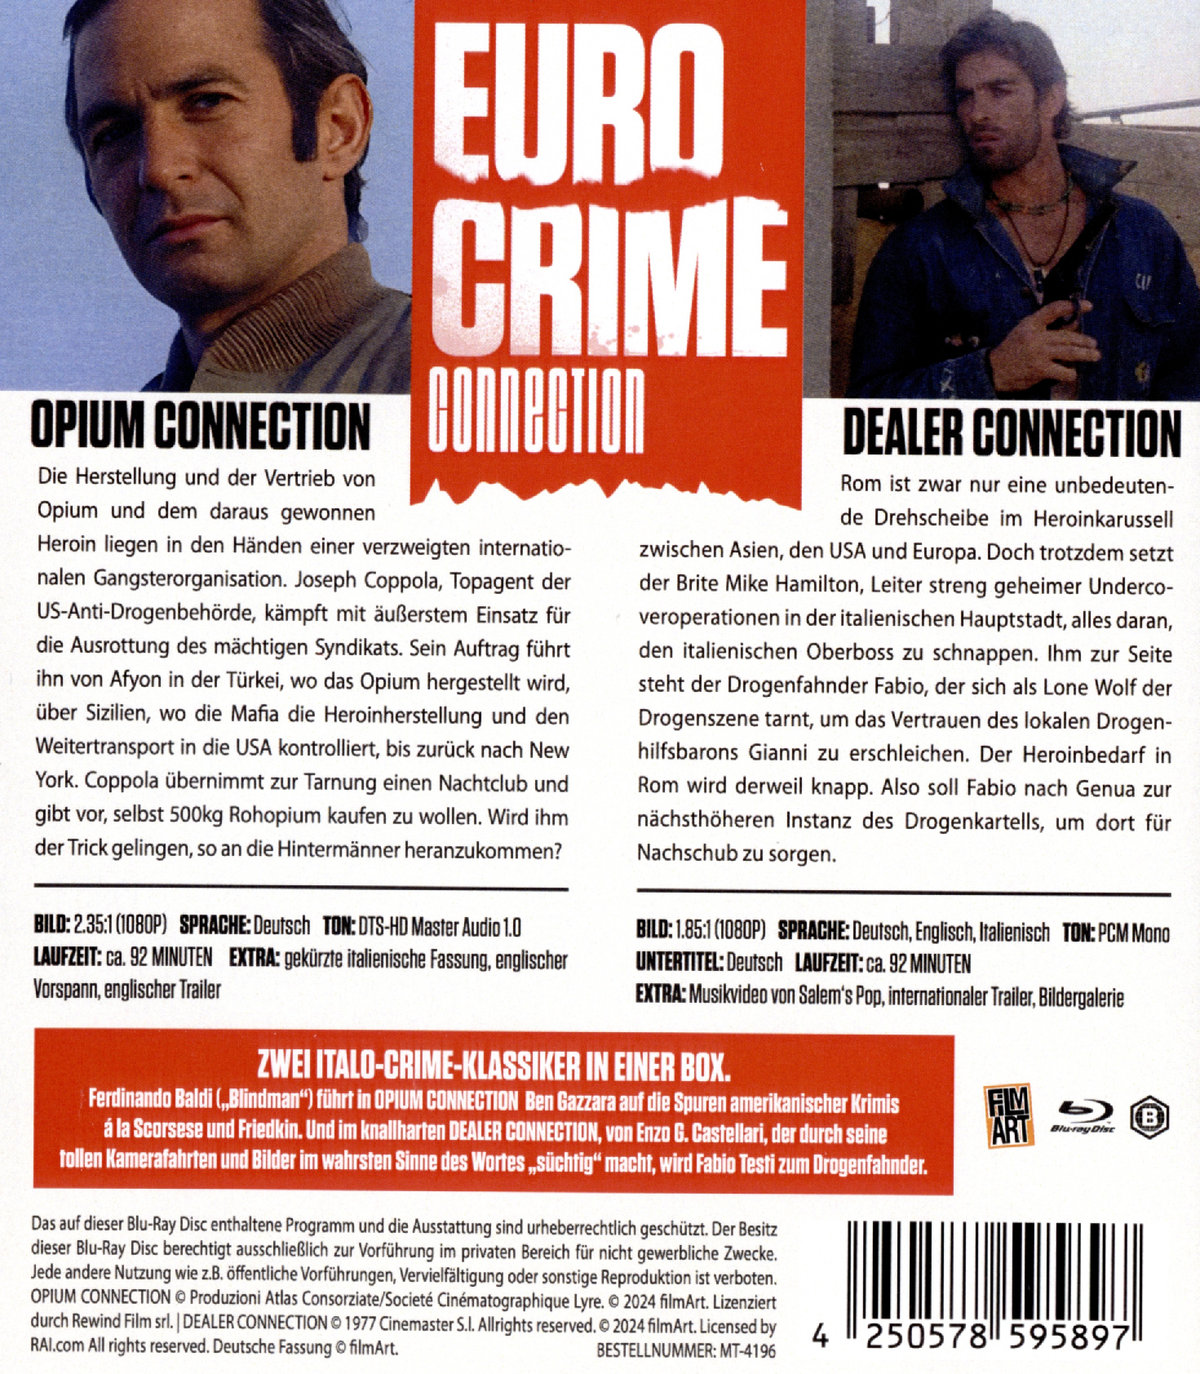 Eurocrime Connection: Dealer Connection + The Opium Connection - Uncut Edition  (Blu-ray Disc)